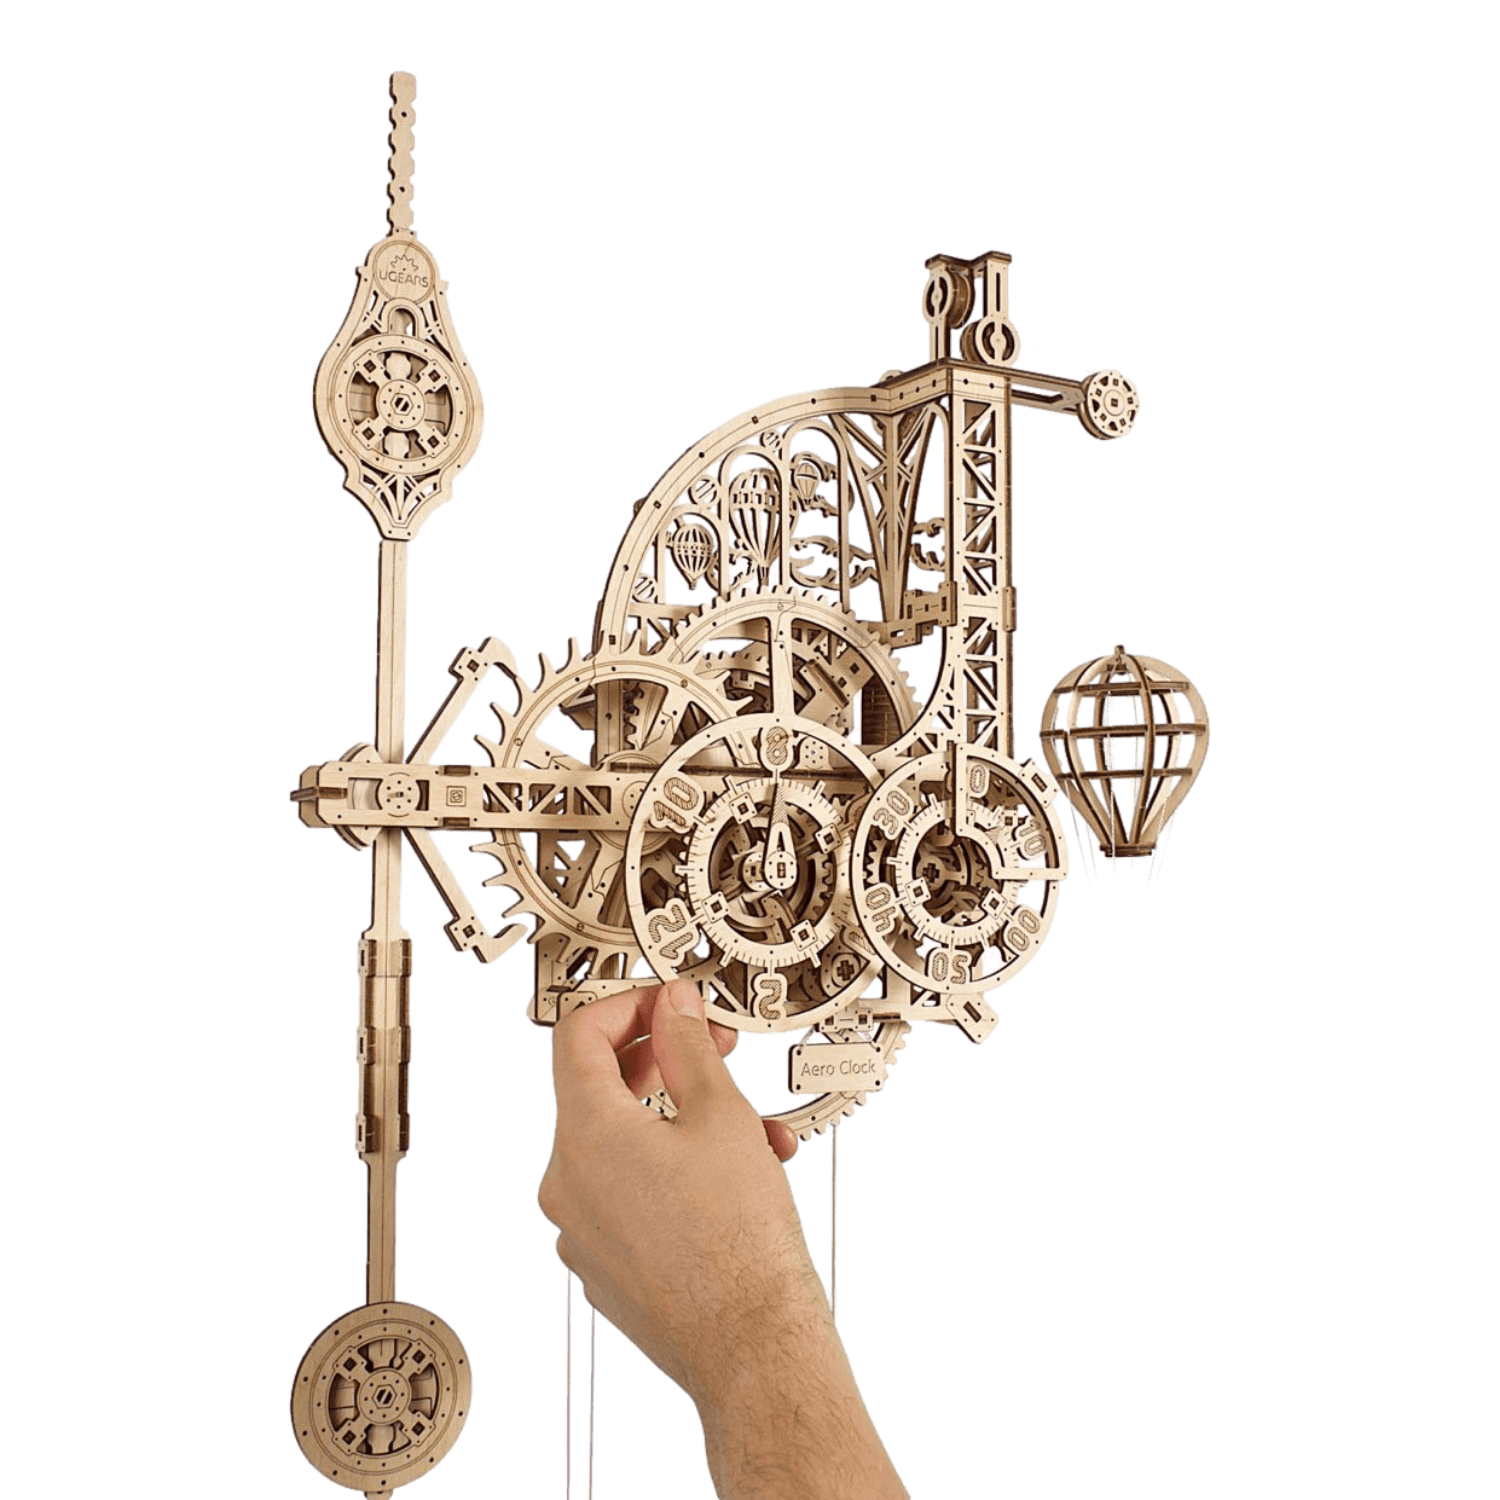 Aero wall clock with pendulum